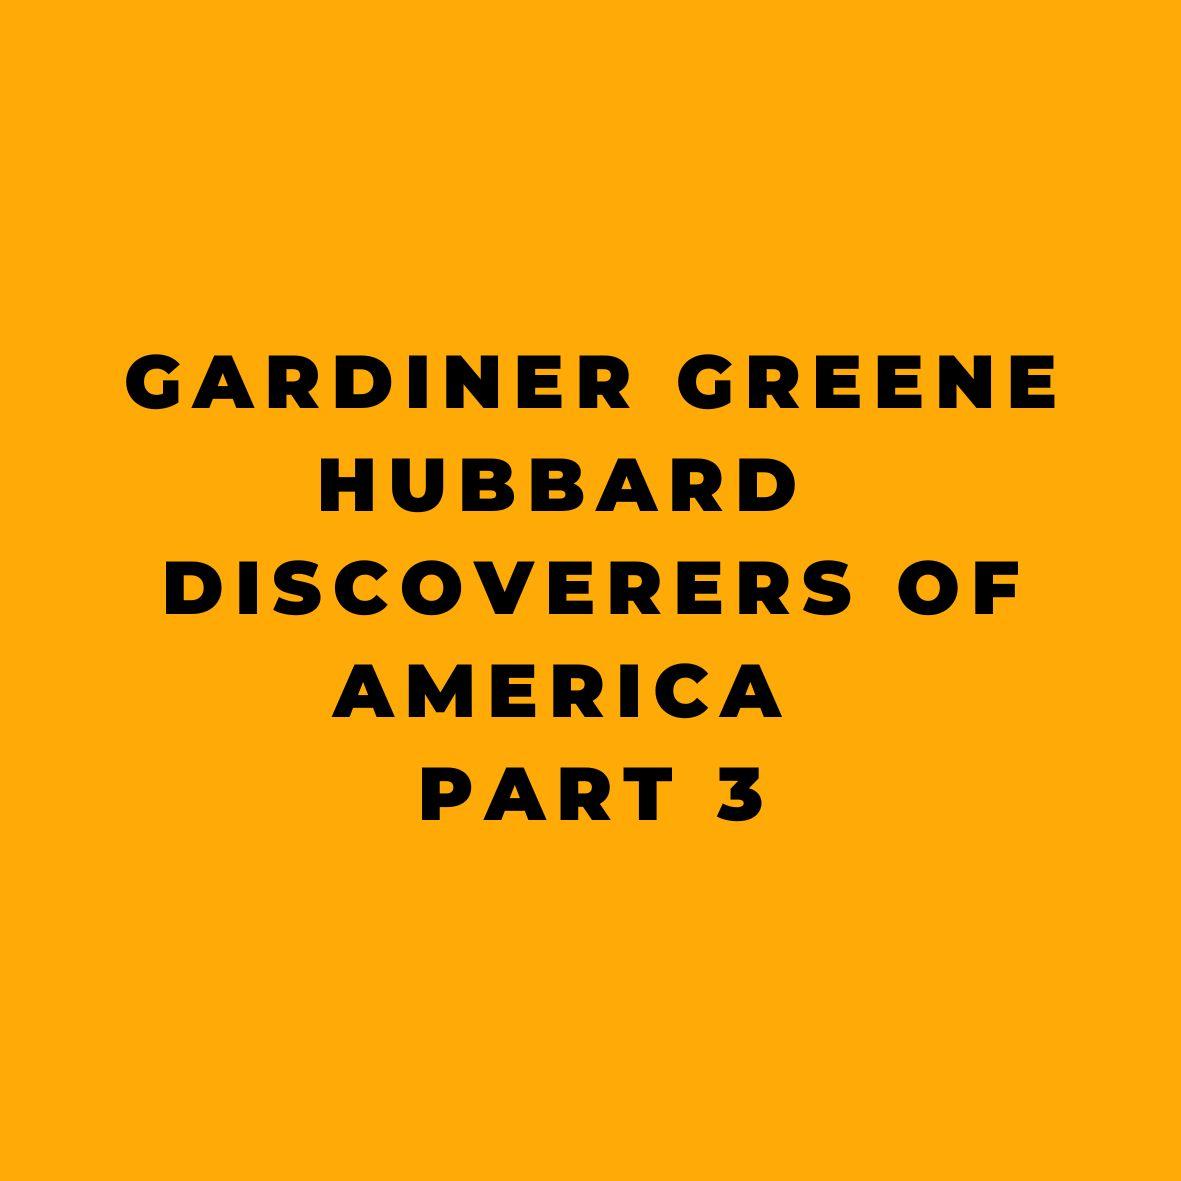 Gardiner Greene Hubbard Discoverers of America Part 3